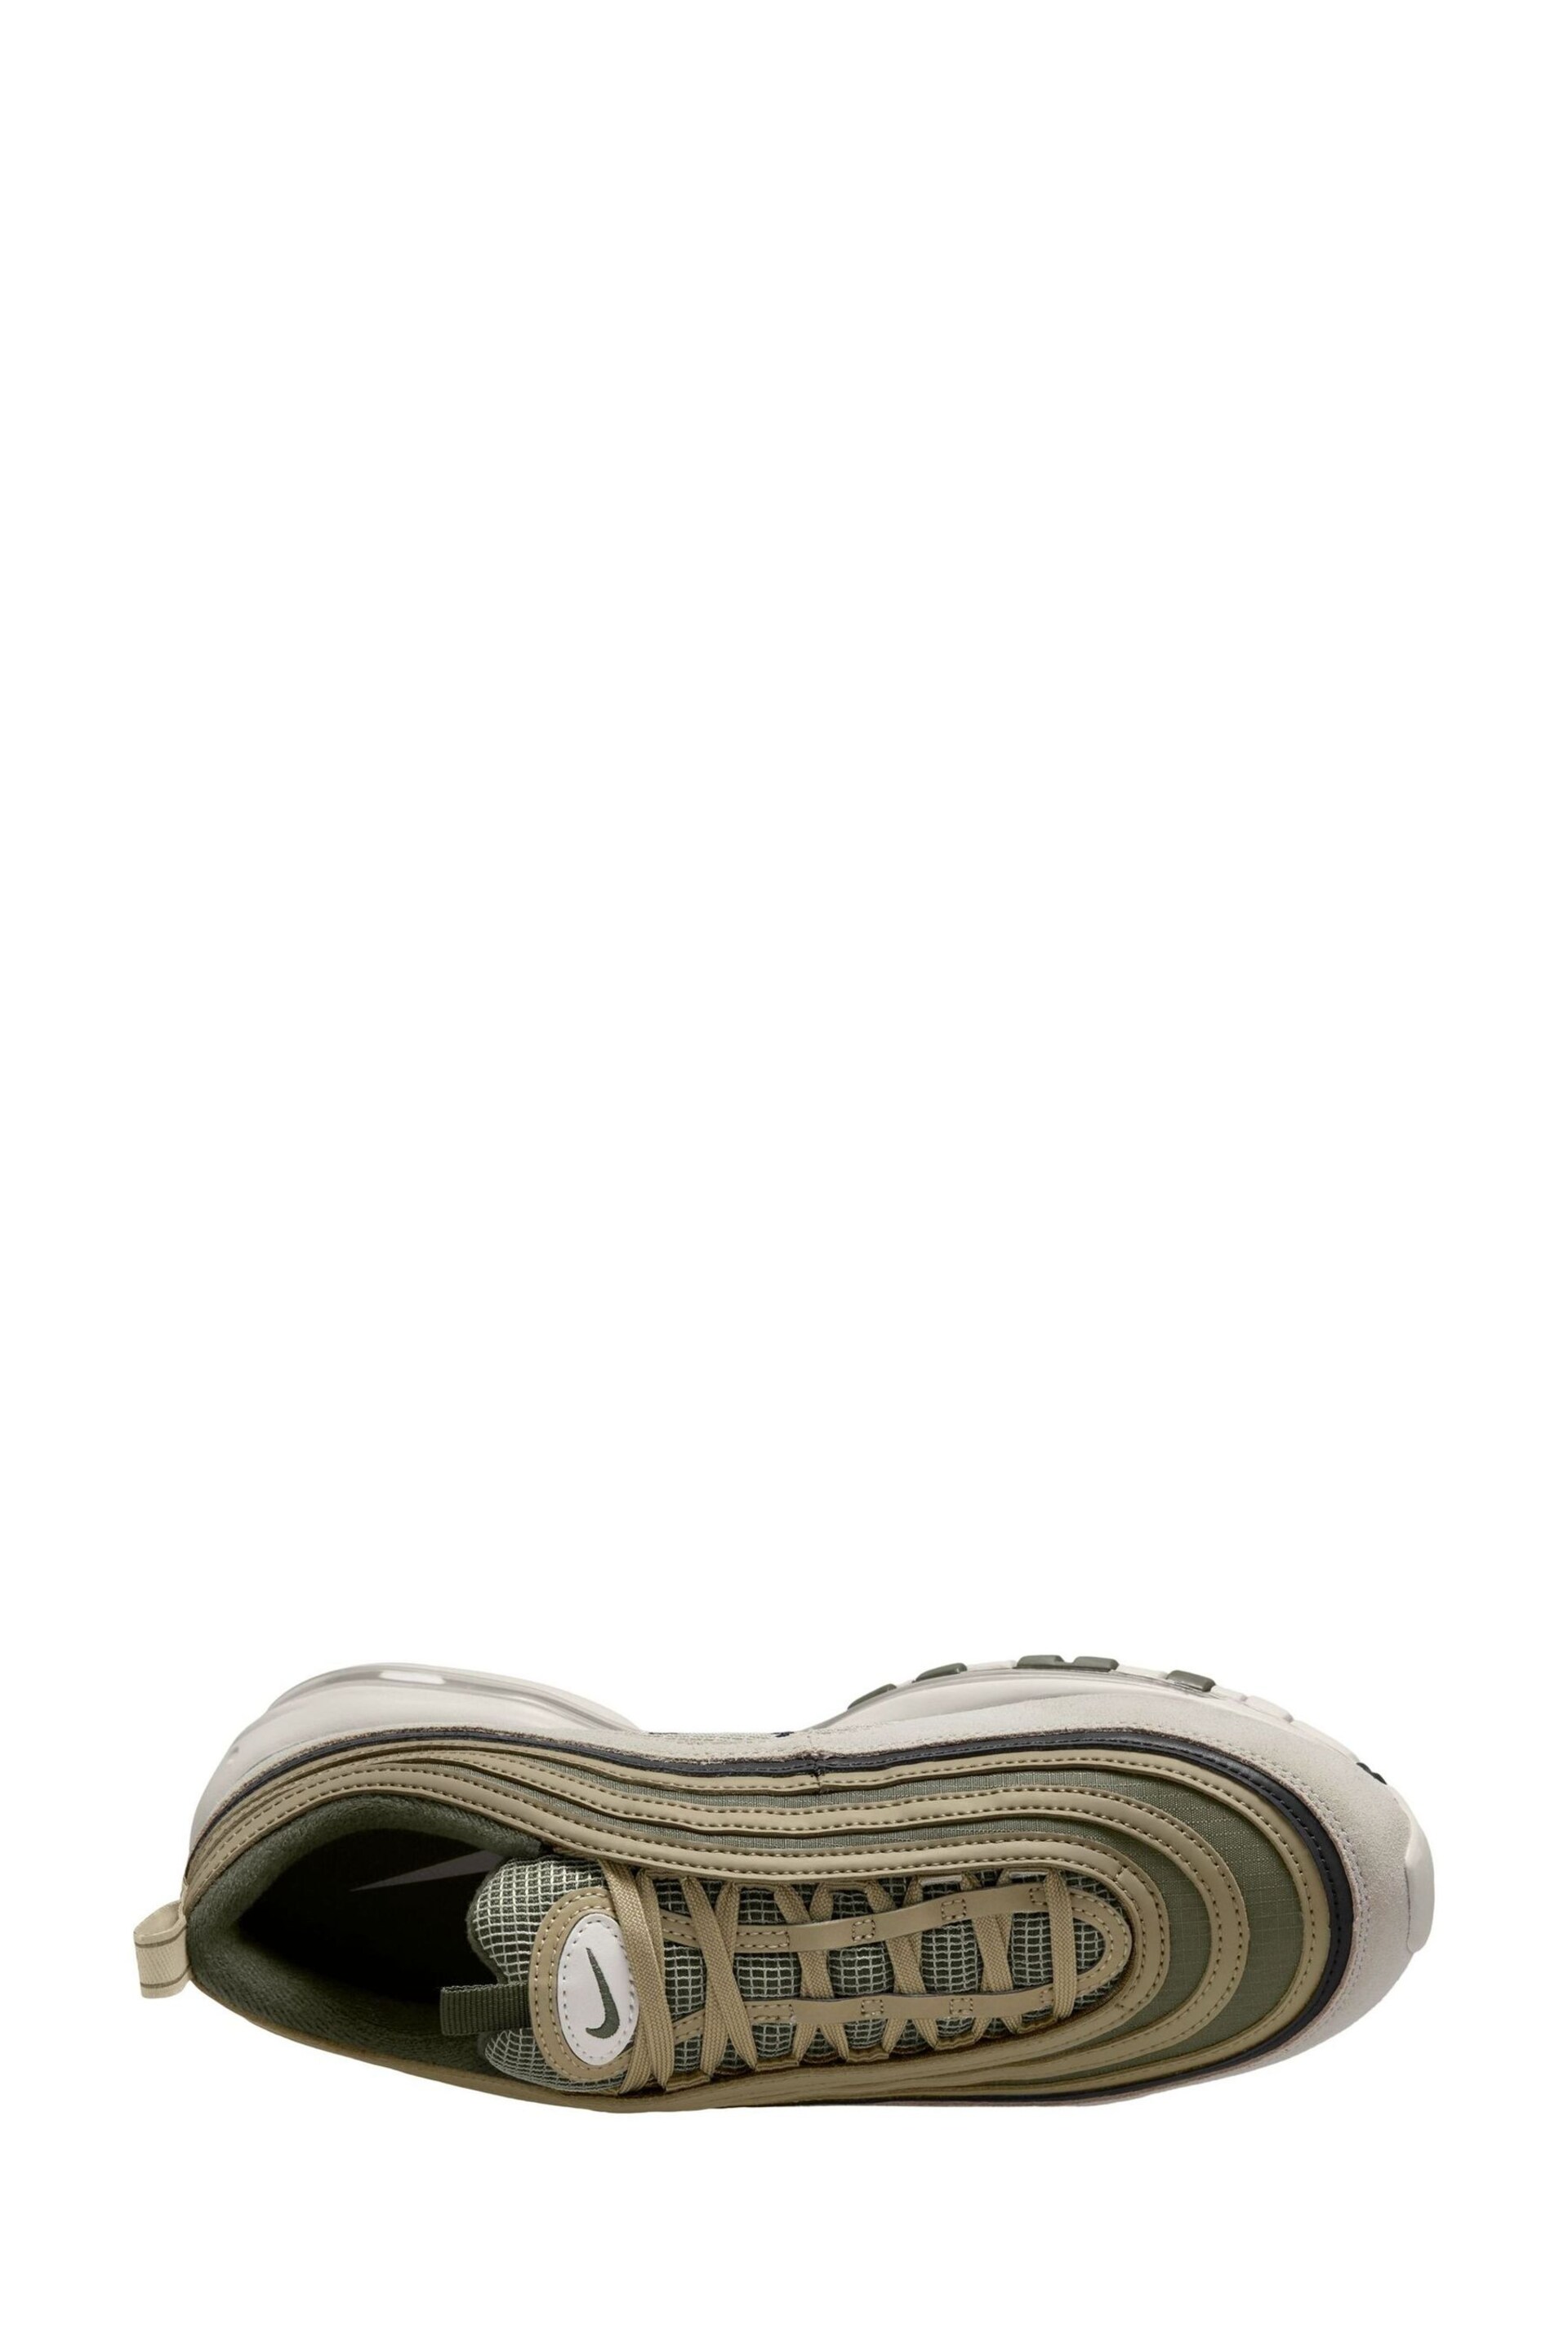 Nike Khaki Green Air Max 97 Trainers - Image 8 of 11